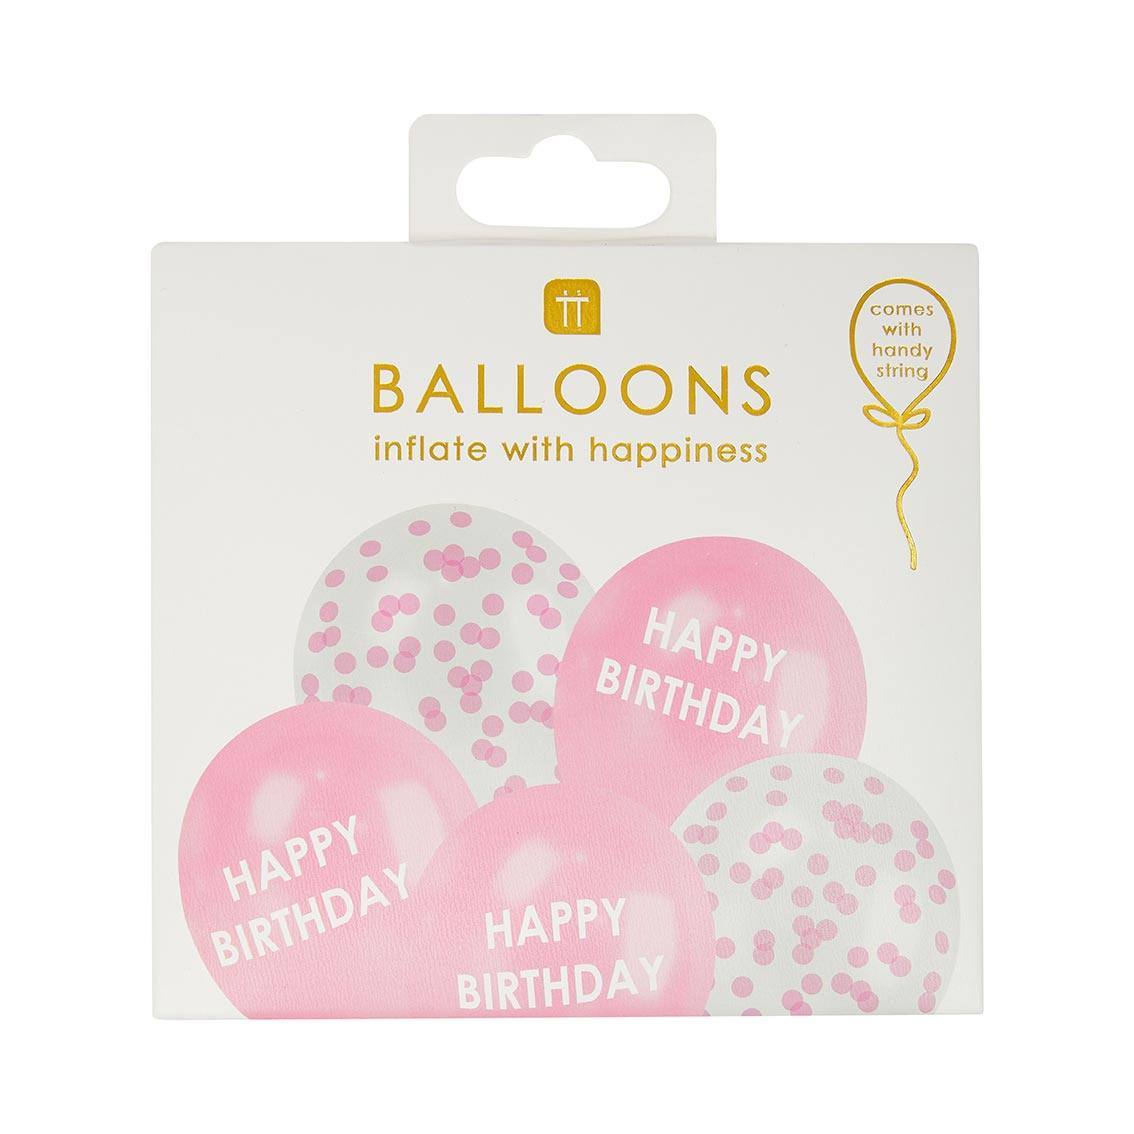 Ballon-Set Pink Happy Birthday mit Konfettis